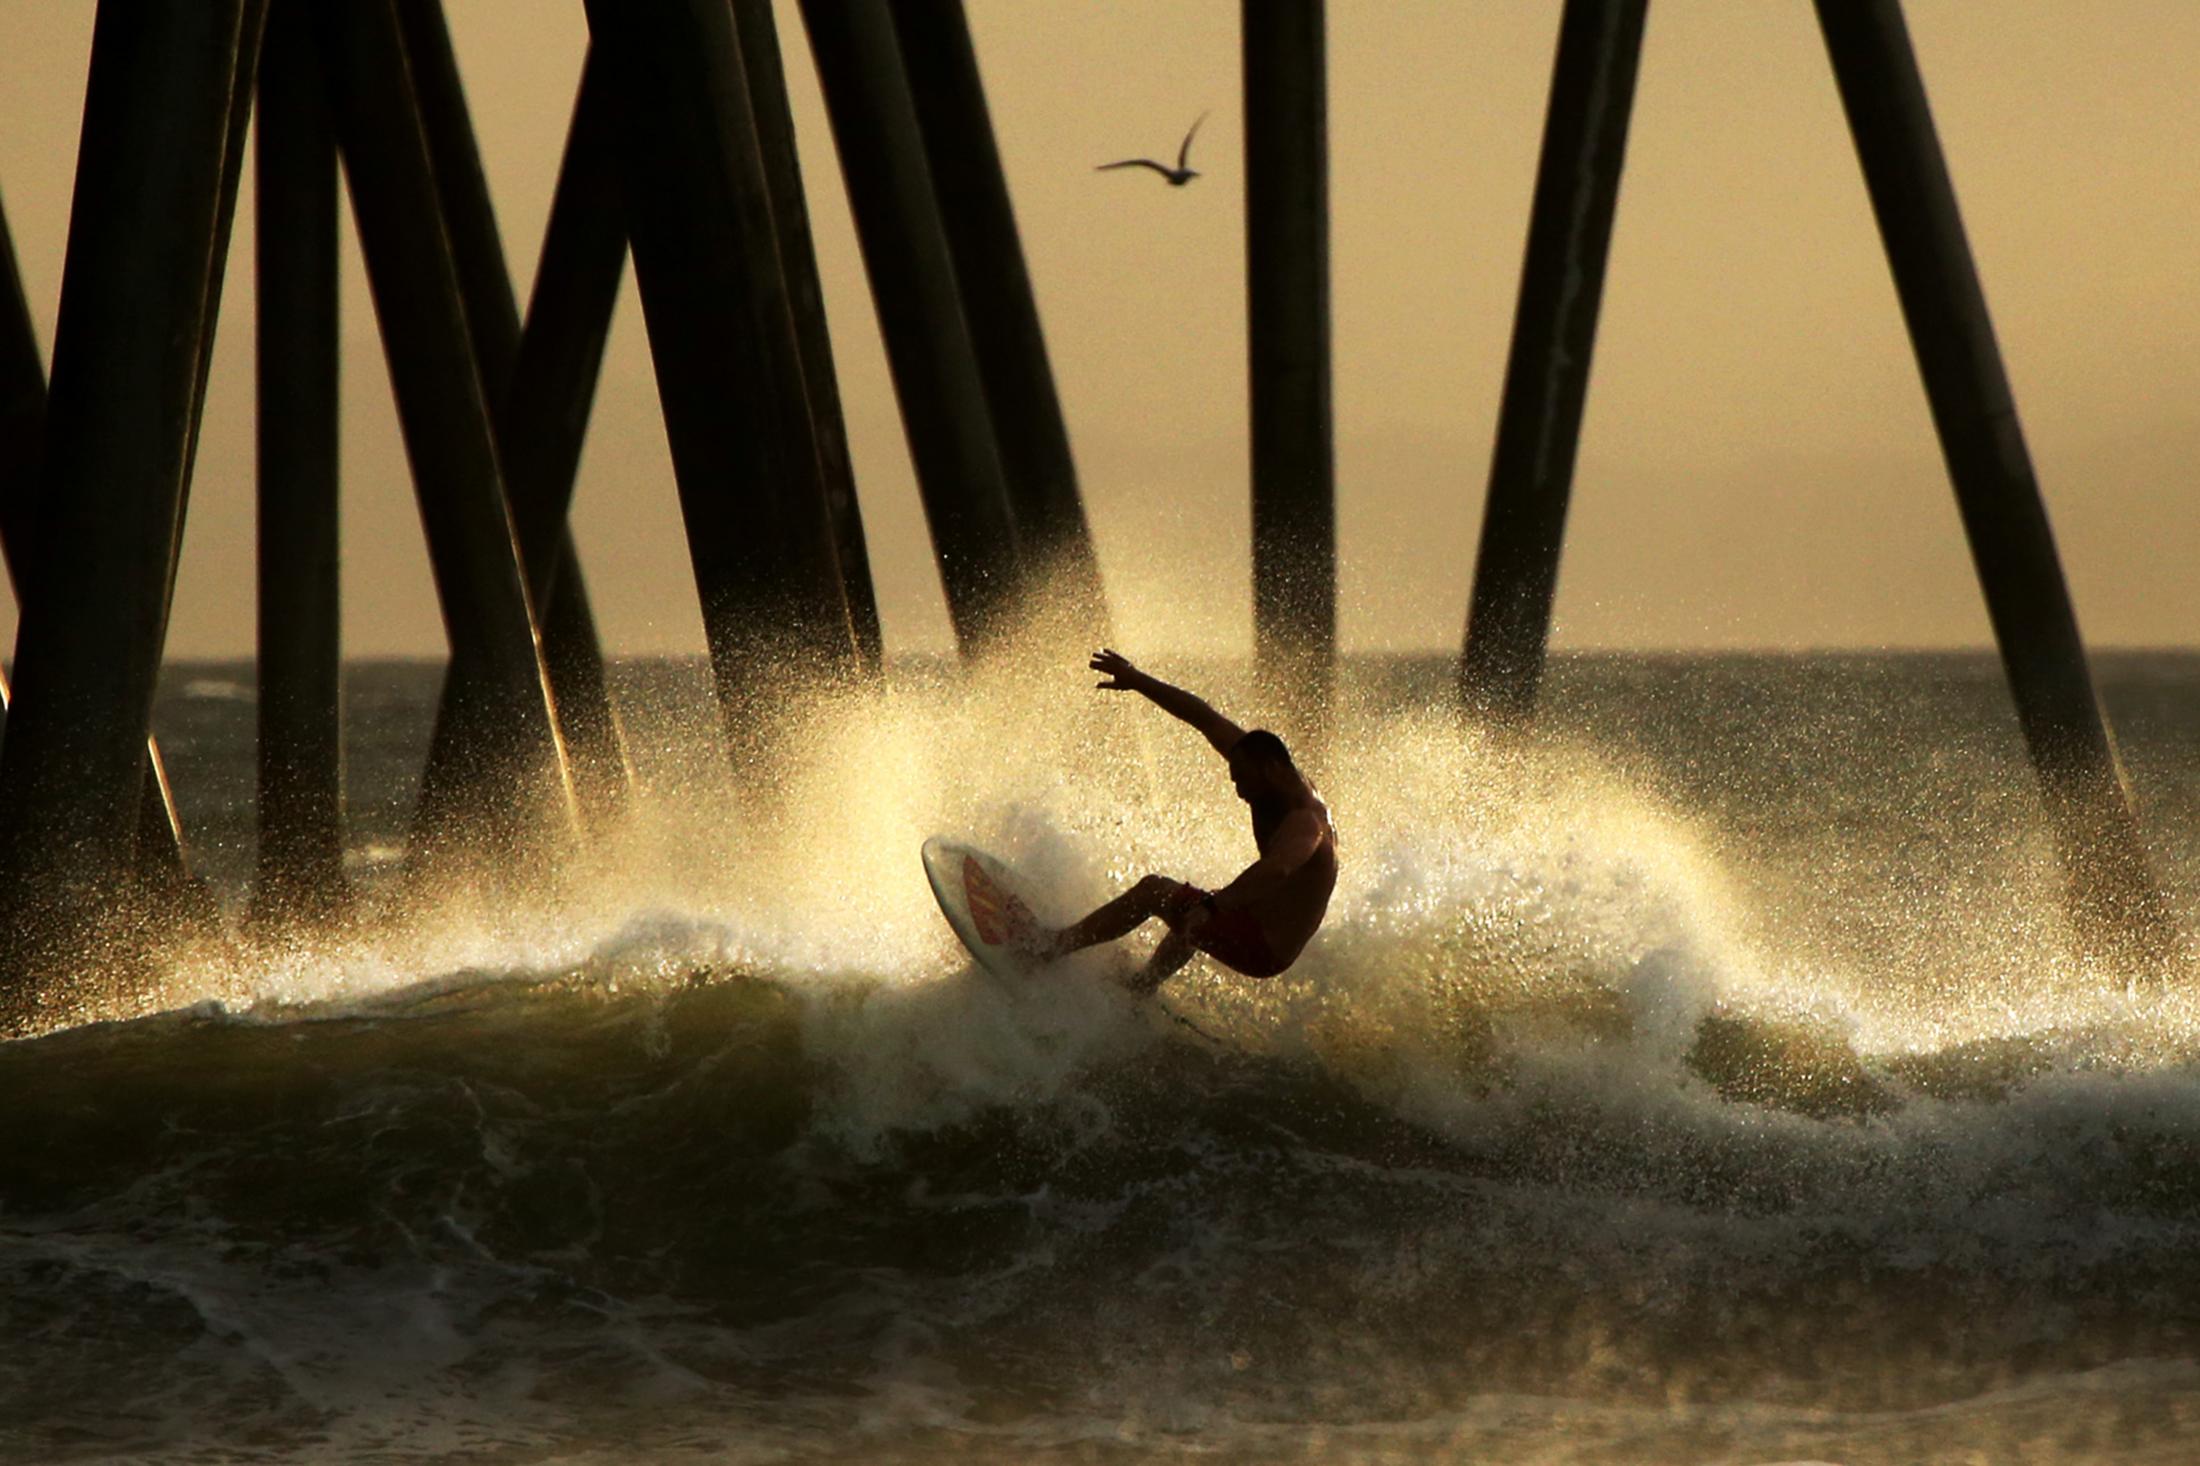 SoCal Surfing - HUNTINGTON BEACH, CA - JANUARY 19: A surfer rides a wave...